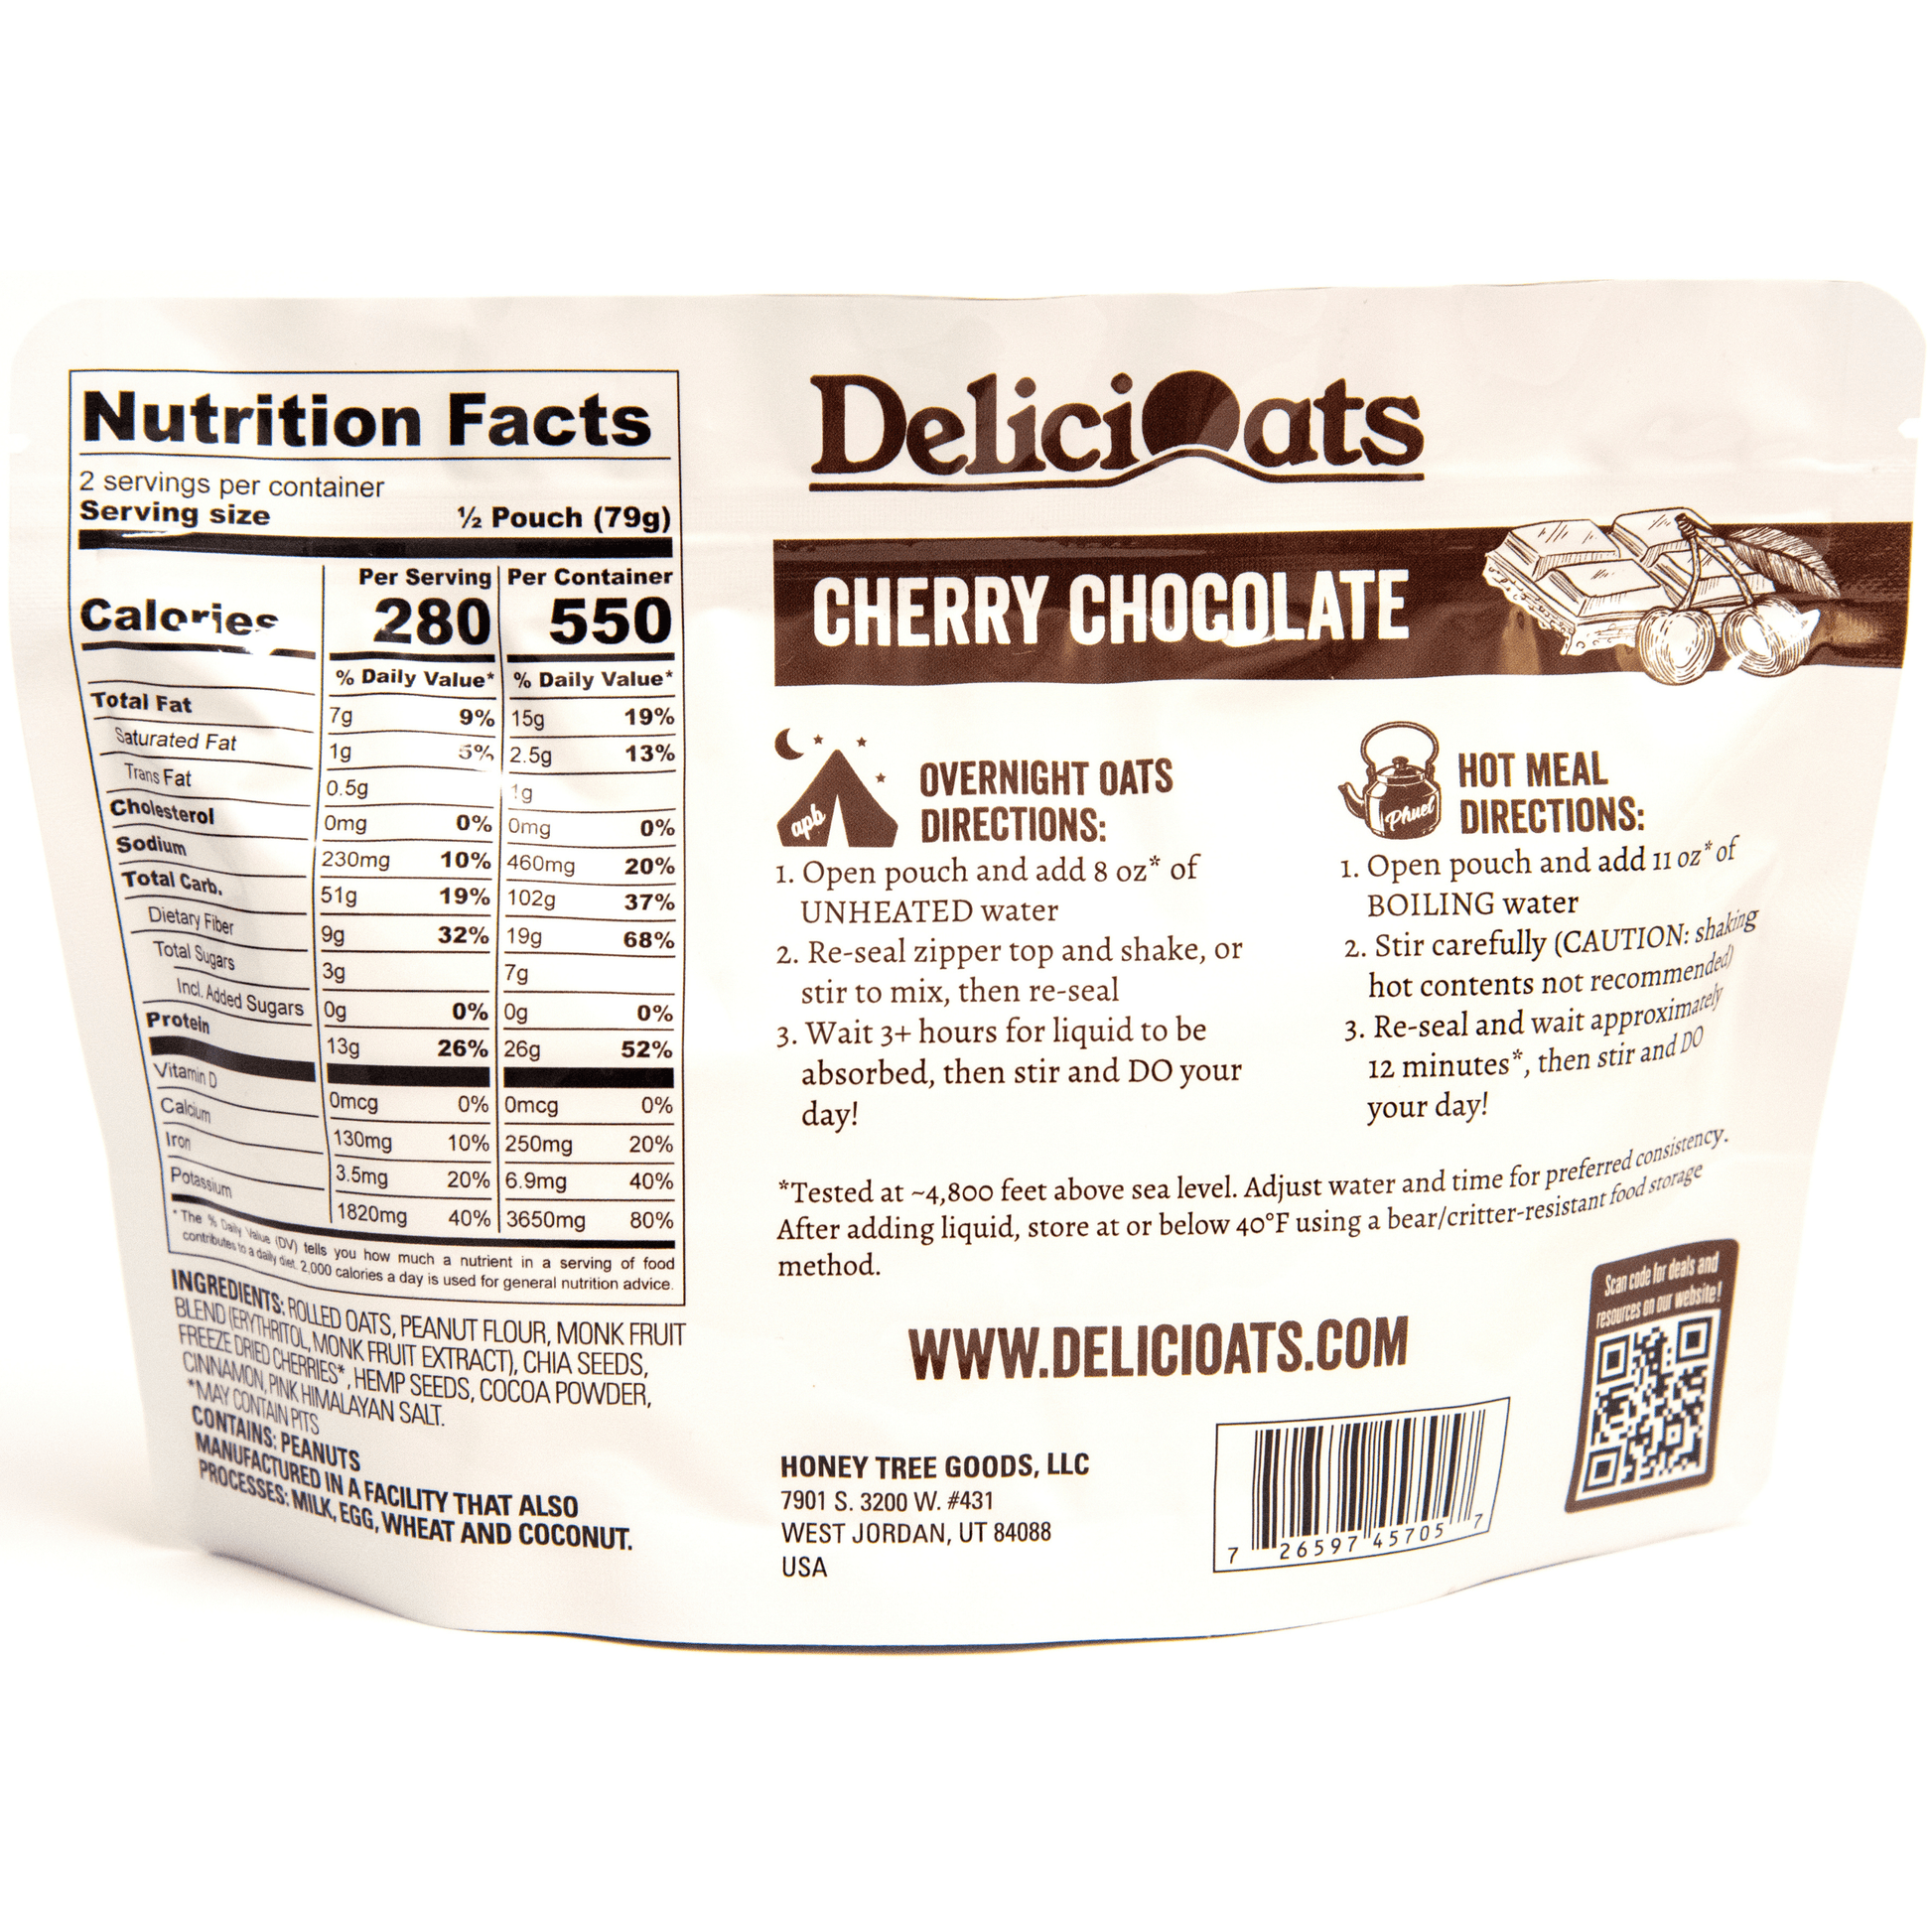 DeliciOats Food Items 3x Cherry Chocolate & 3x Blueberry Vanilla